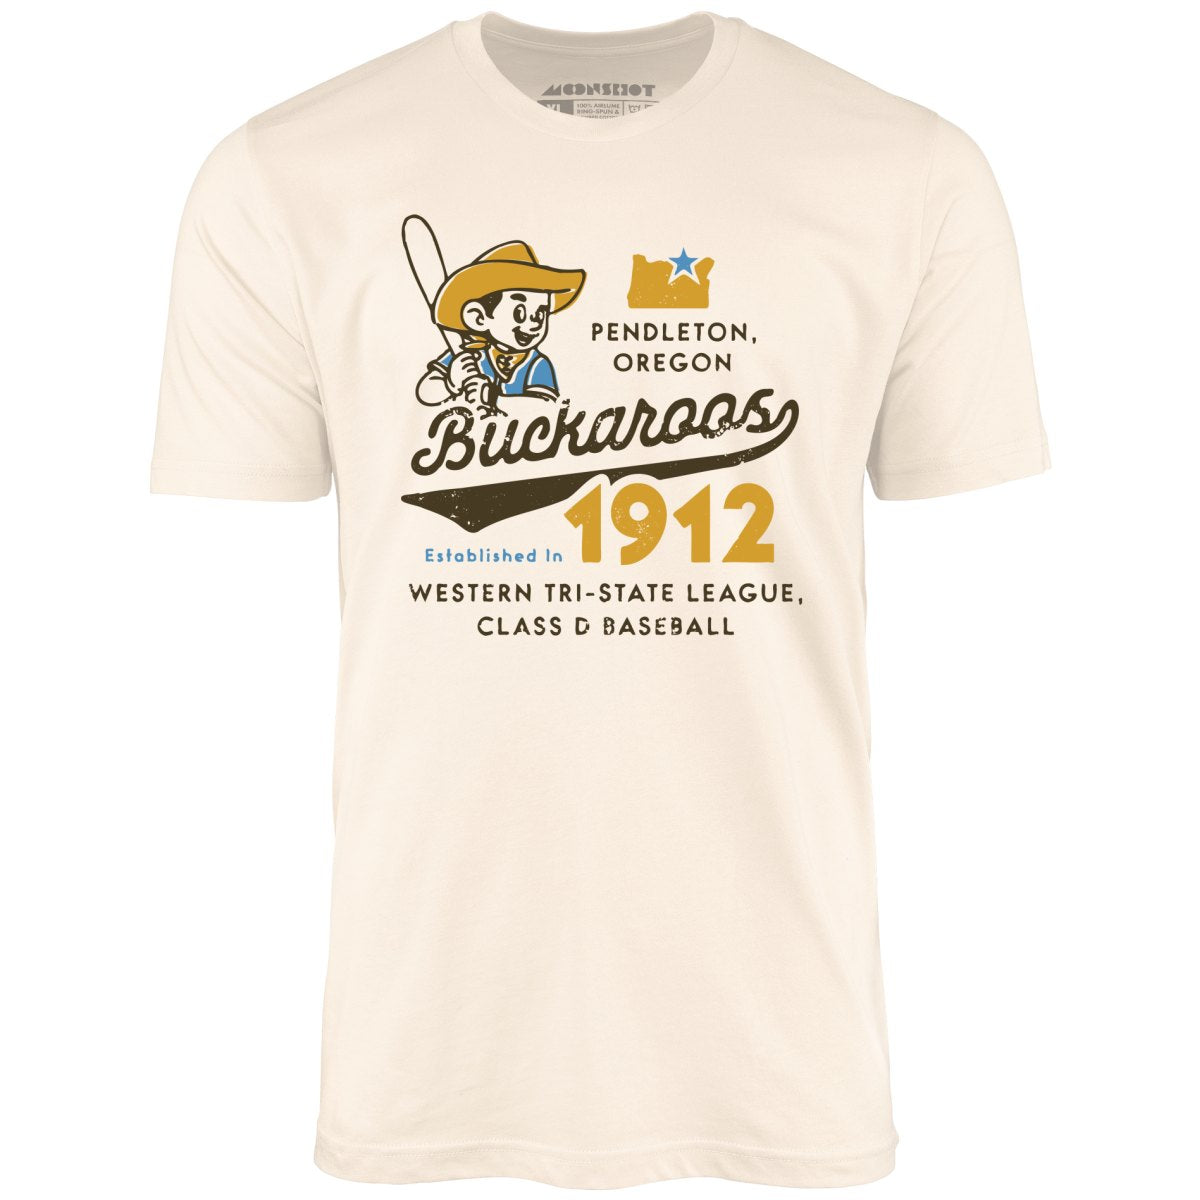 Pendleton Buckaroos - Oregon - Vintage Defunct Baseball Teams - Unisex T-Shirt